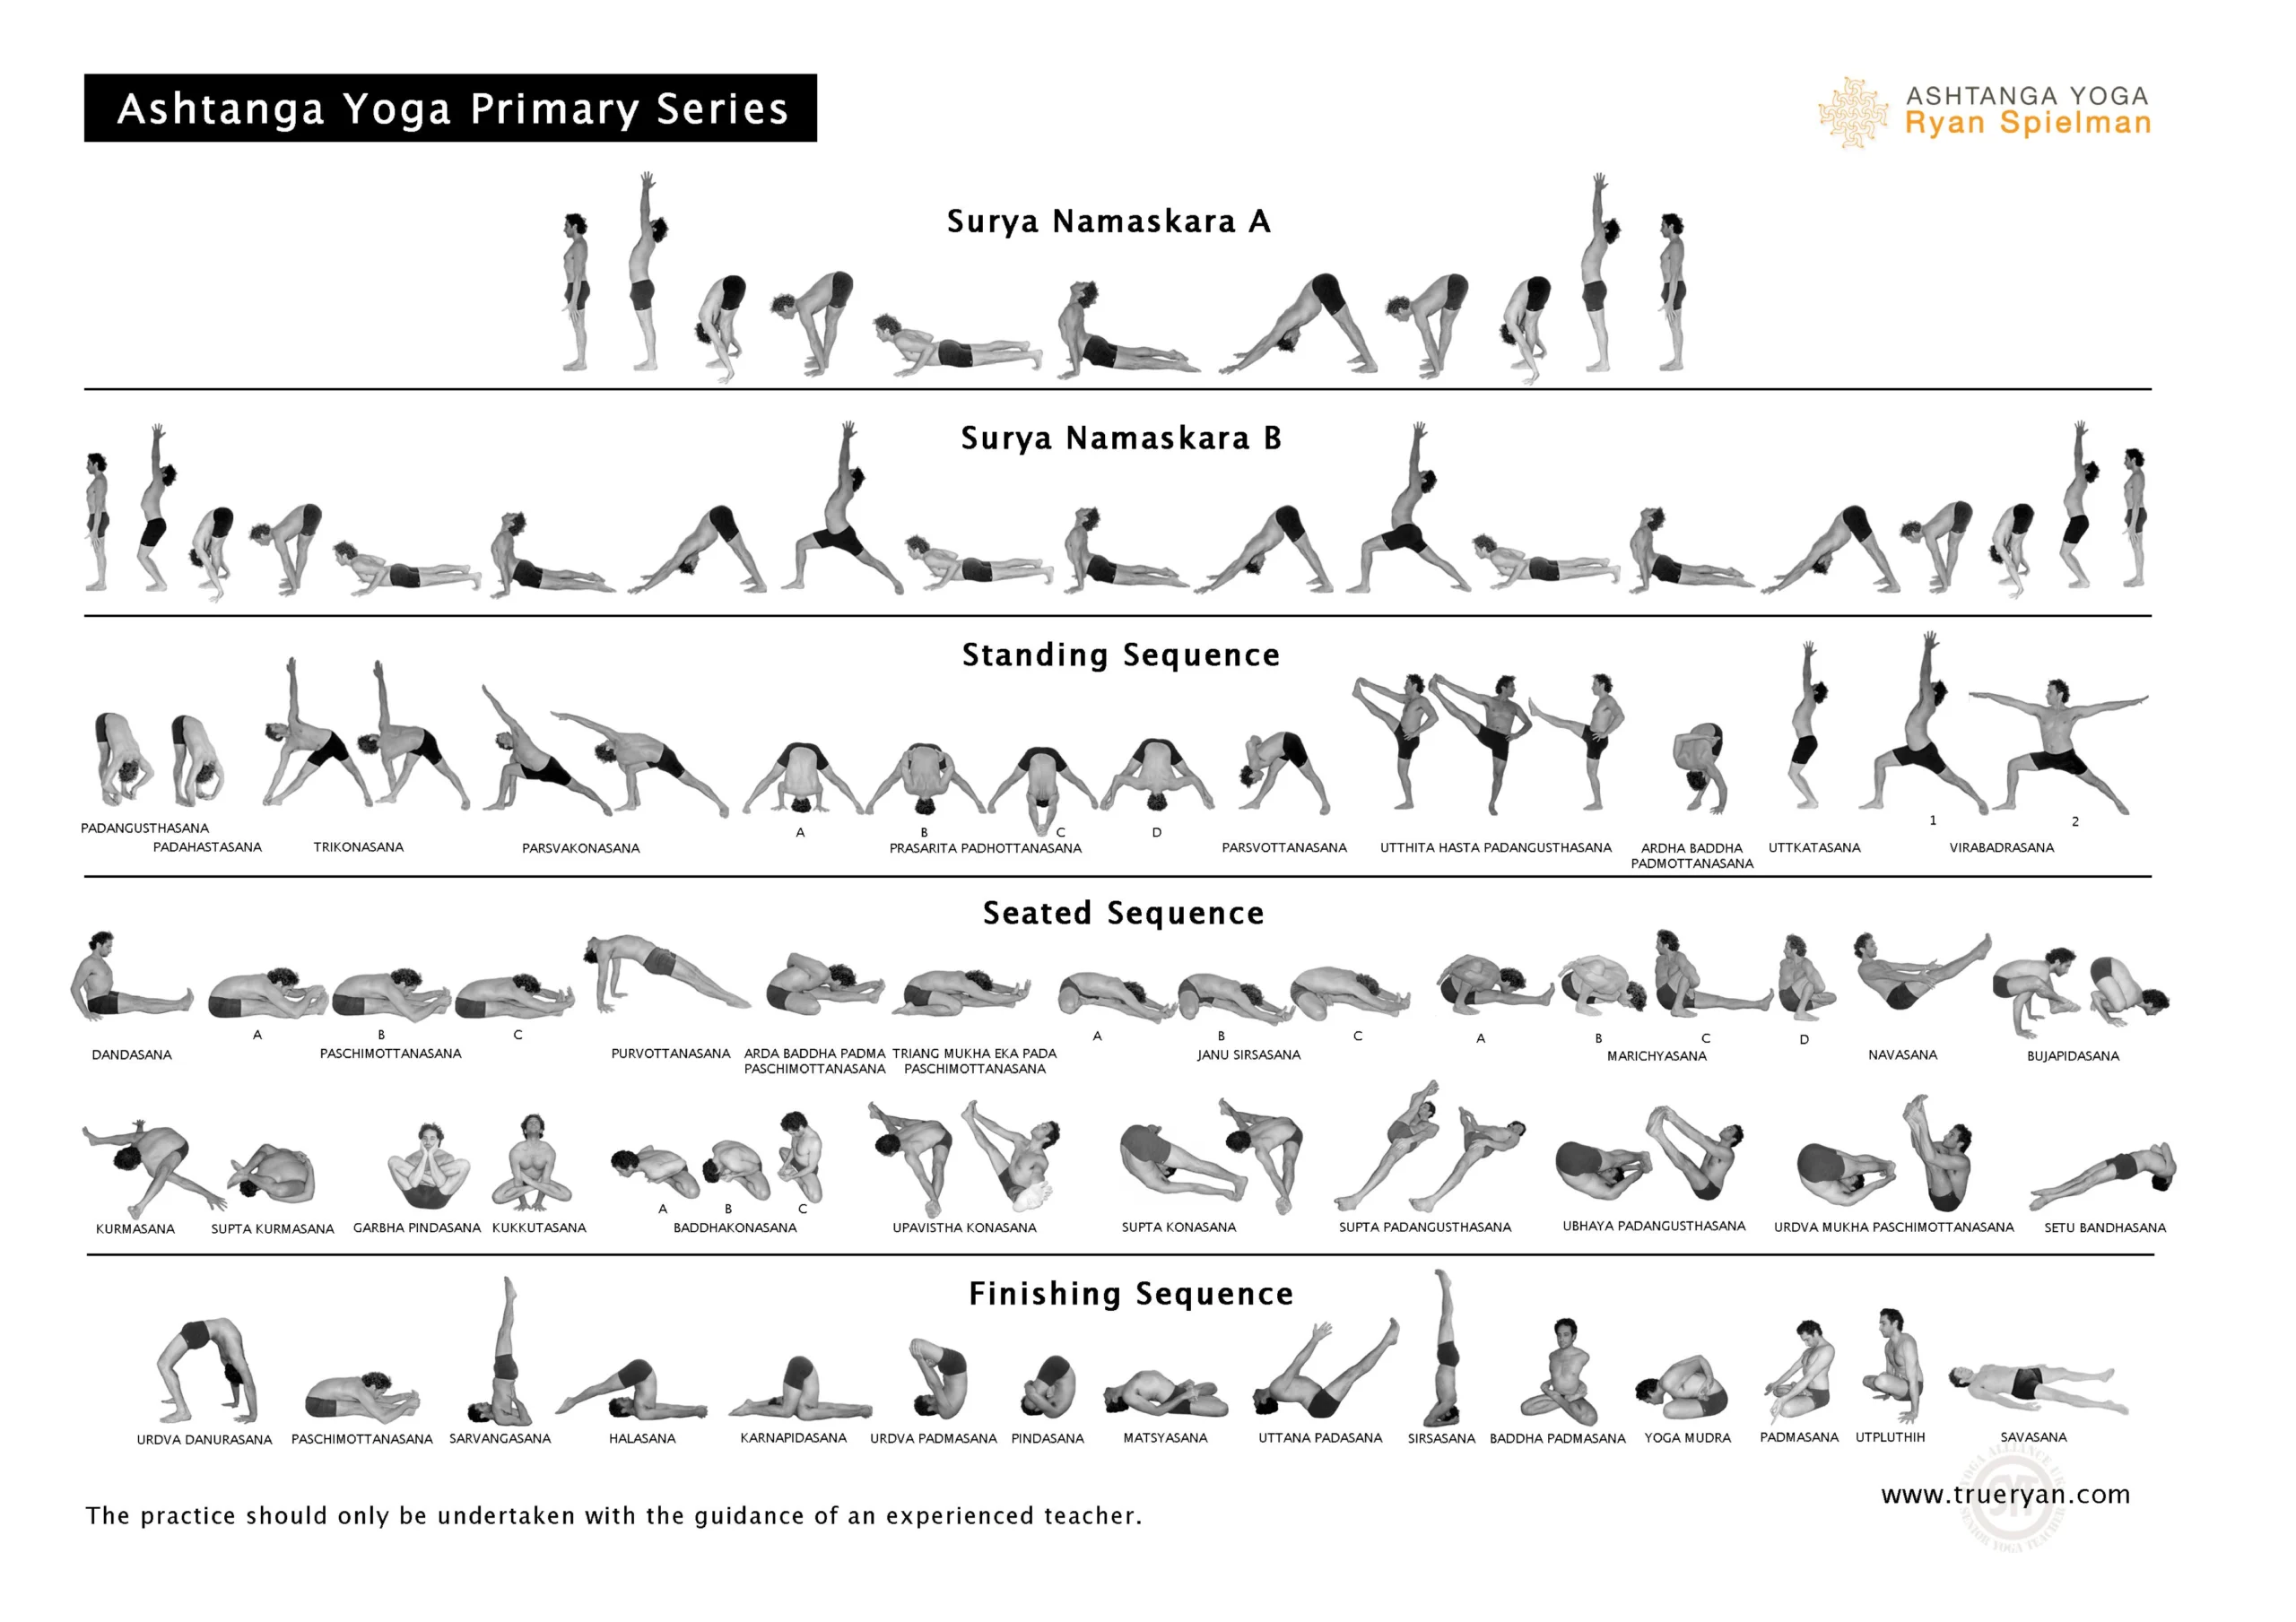 mysore yoga sequence - What are the 6 levels of Ashtanga yoga